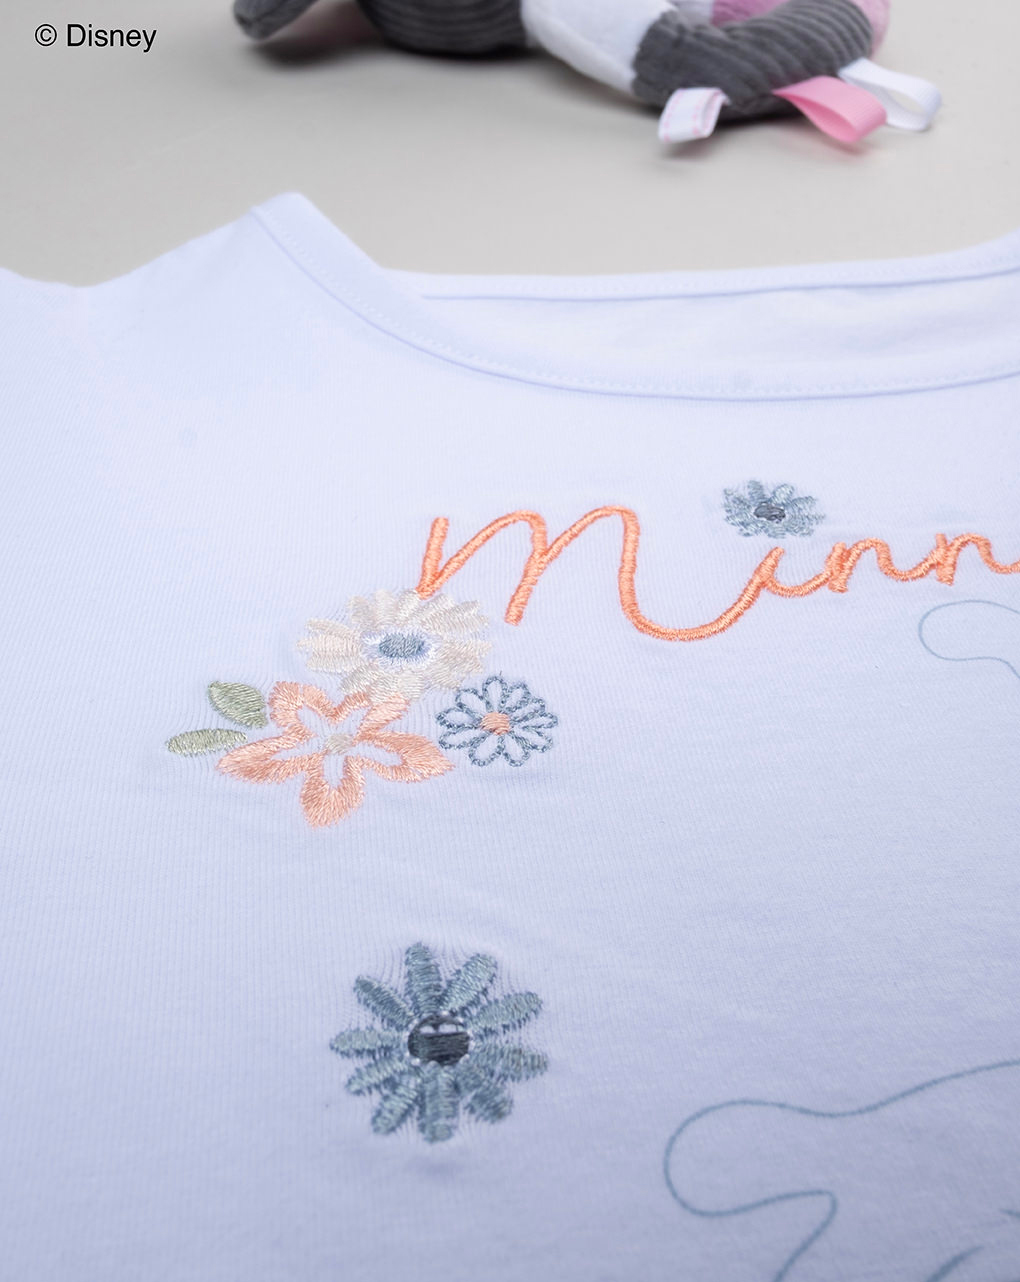 Camiseta disney minnie blanca de niña - Prénatal